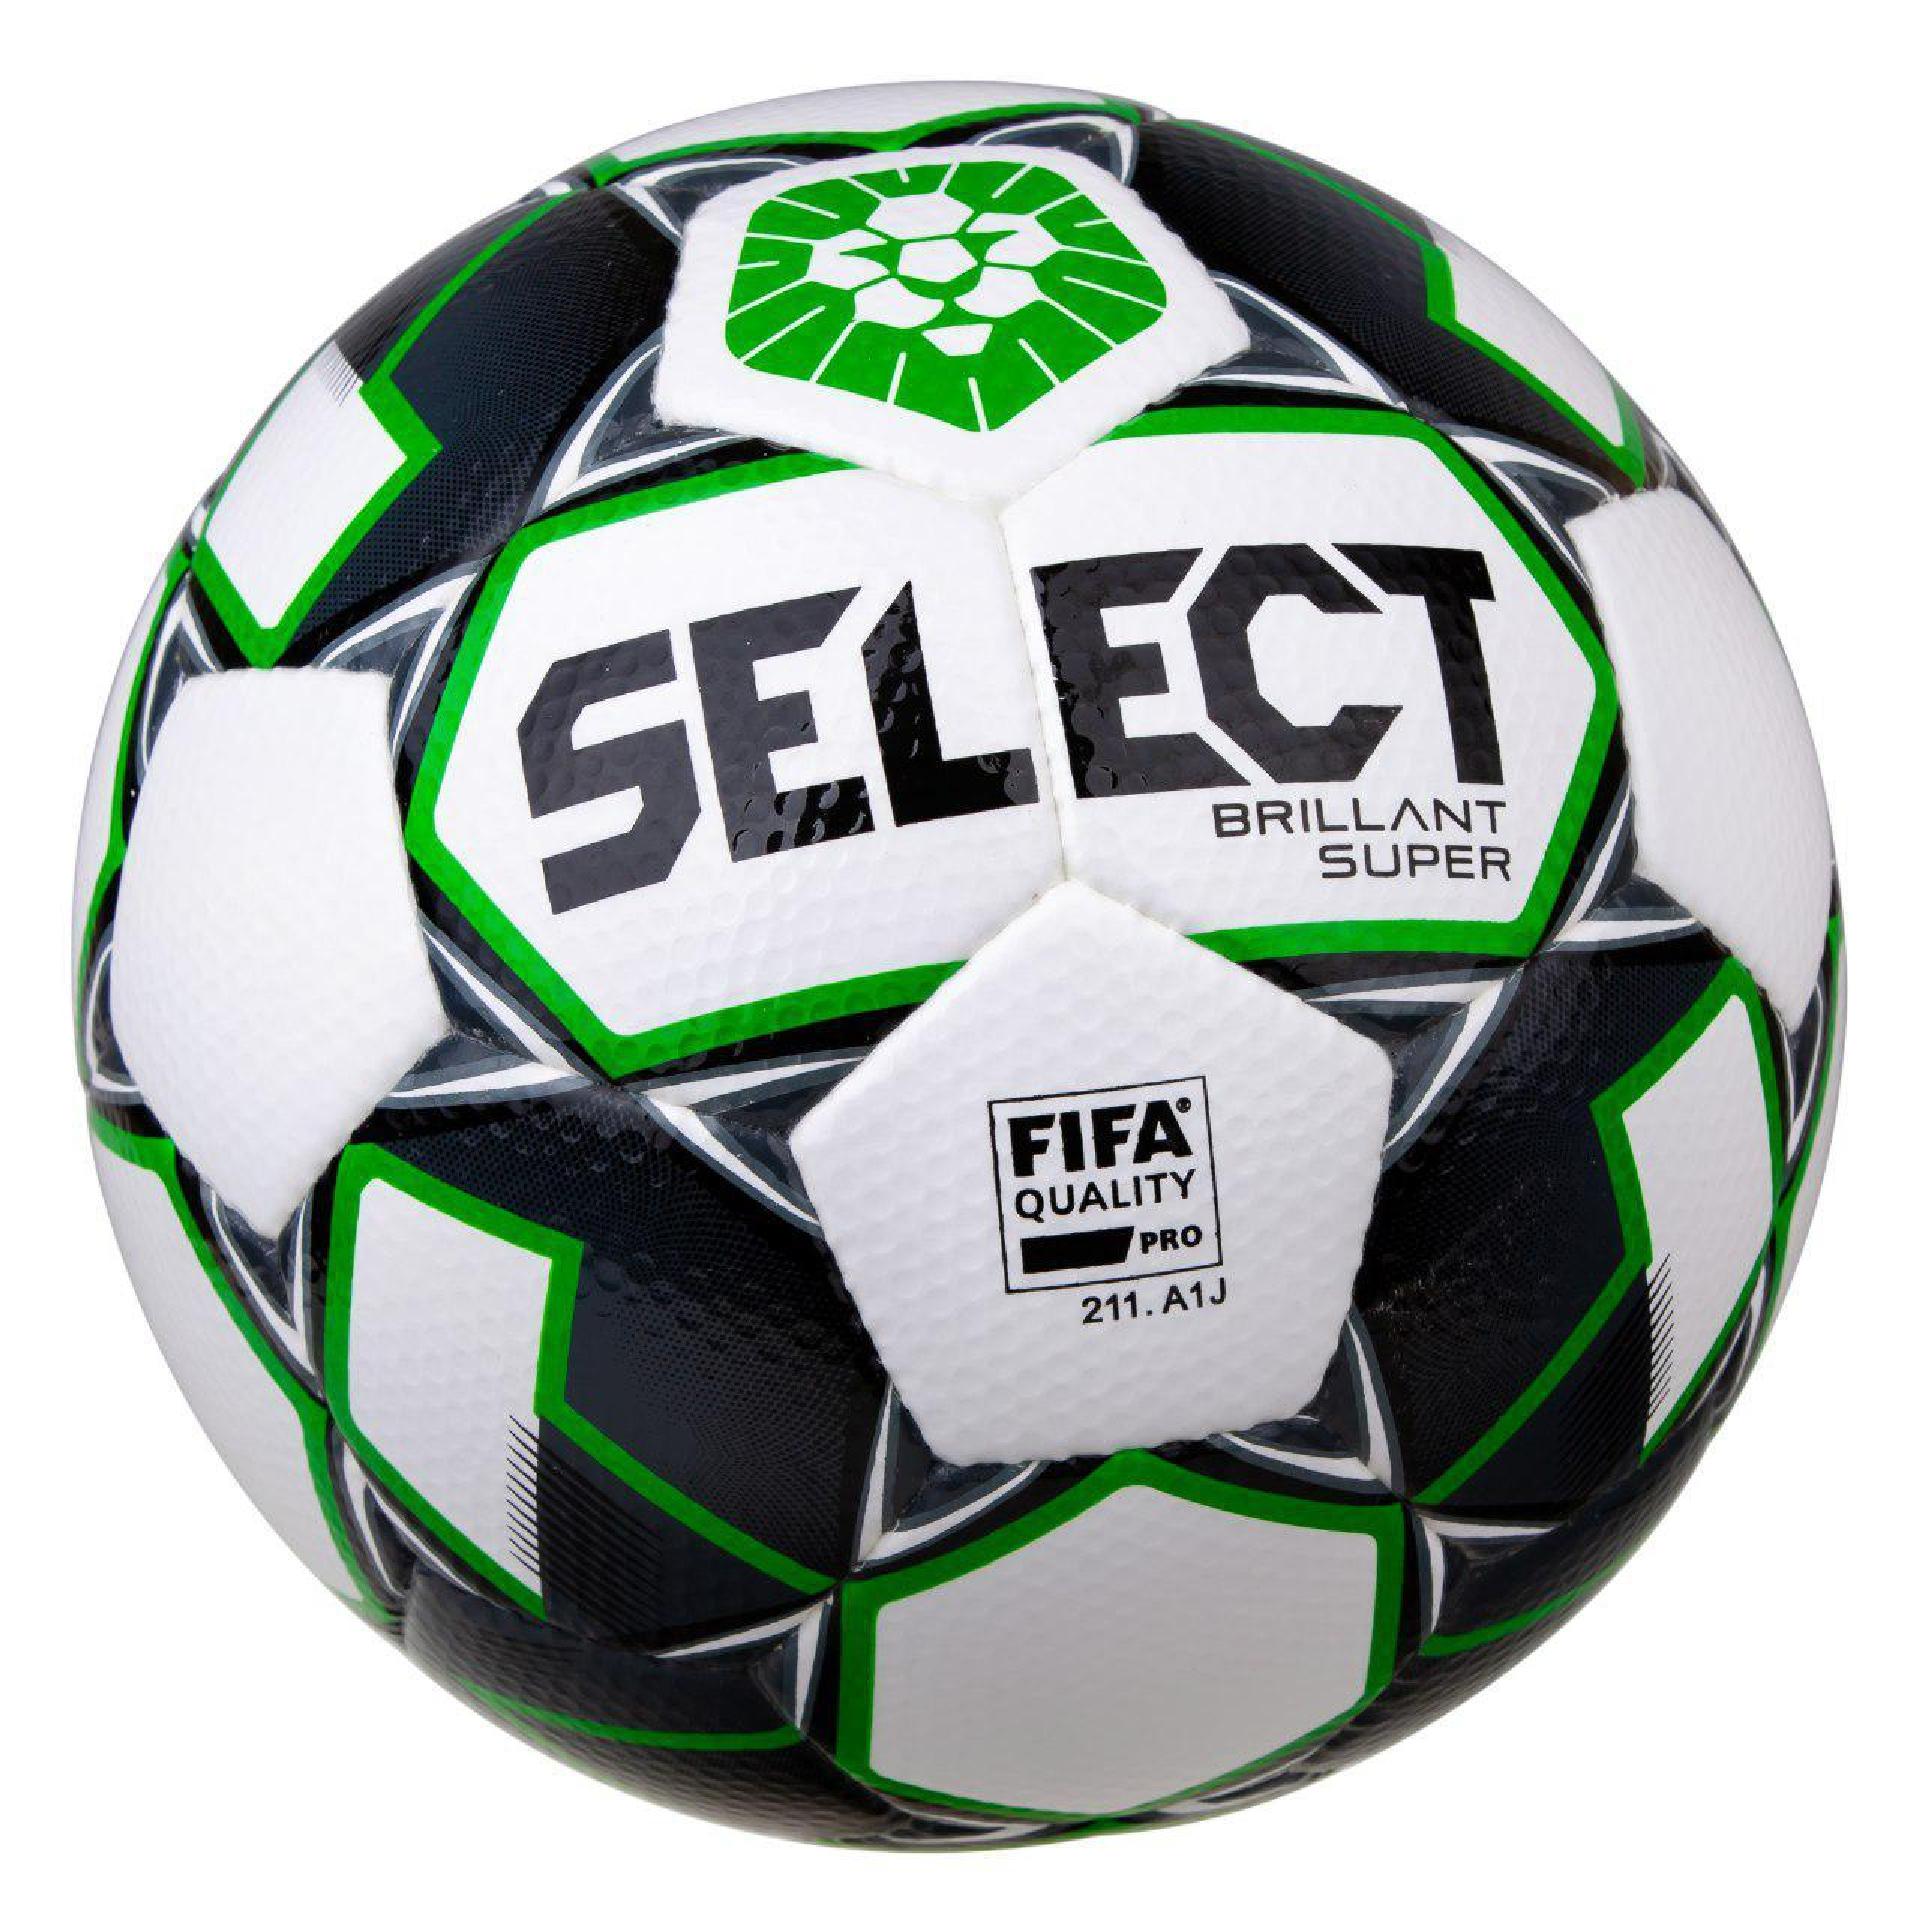 Мячи футбольные fifa quality pro. Select мяч FIFA brillant super Brilliant. Select brillant super TB, мяч футбольный ((001) бел/оранж/син, 5) 810316.001. 811322-001 Мяч select Brilliant super. Мяч футбольный select brillant super FIFA 2015.